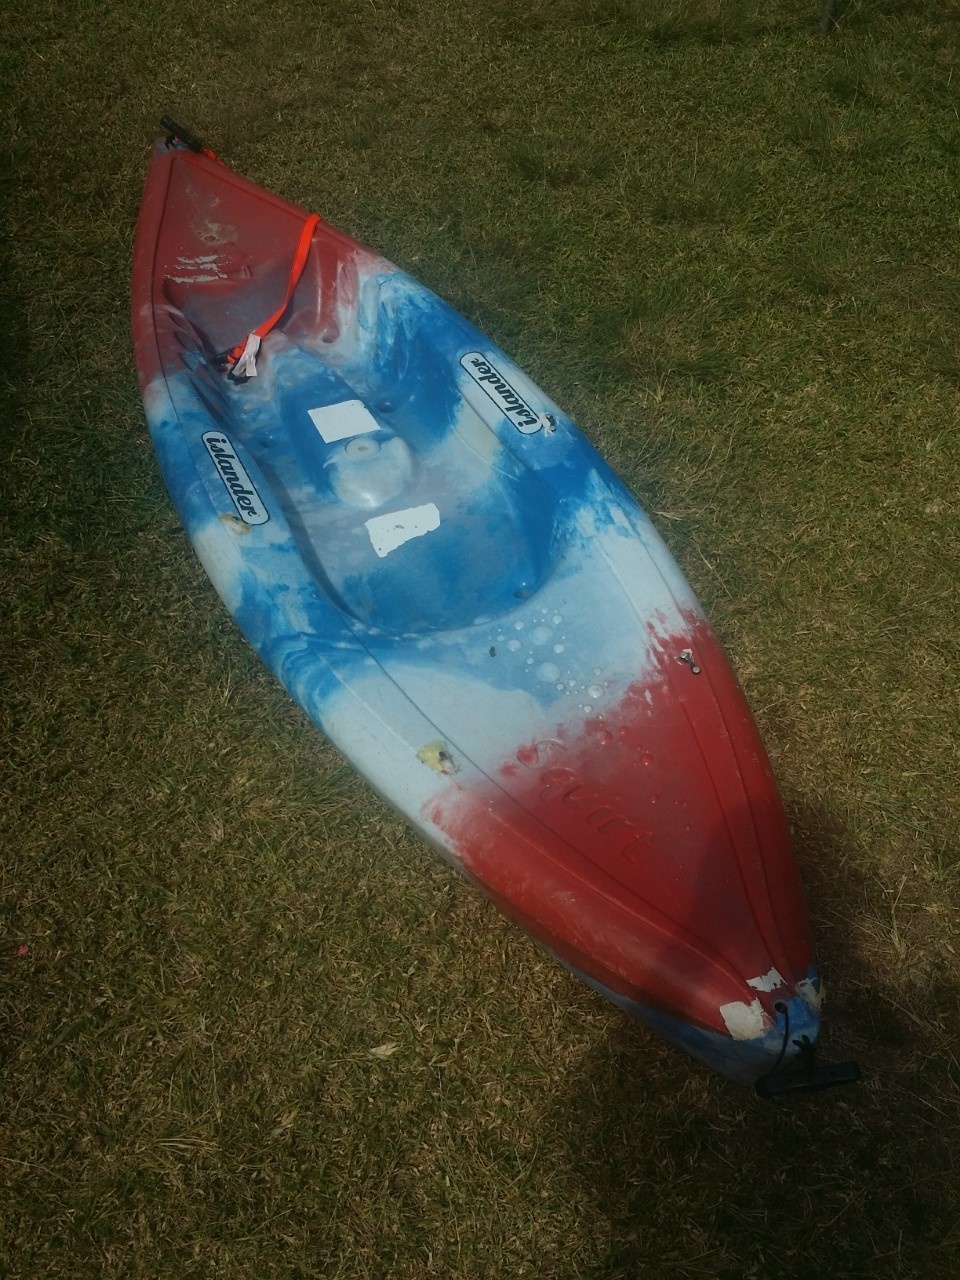 Coast Guard seeks public’s help finding owner of adrift kayak off Kokololio Beach Park, Oahu